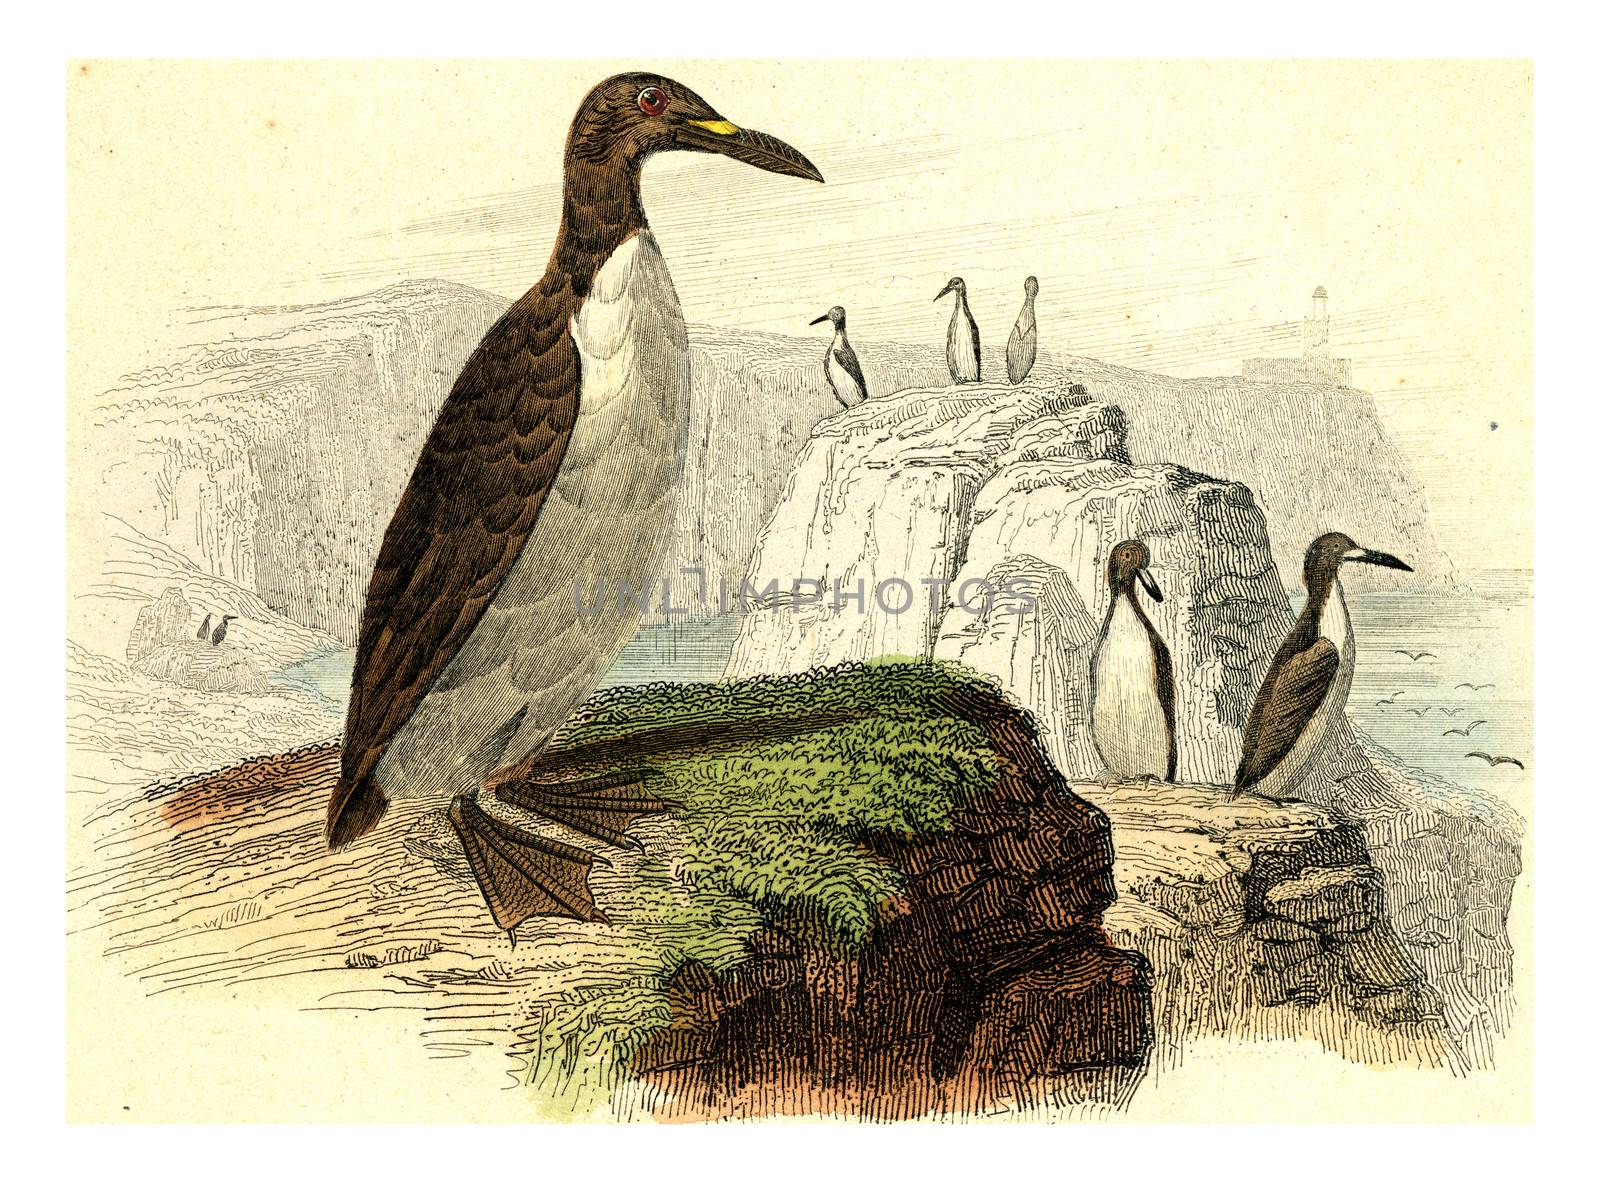 Great penguin, vintage engraved illustration. From Buffon Complete Work.
